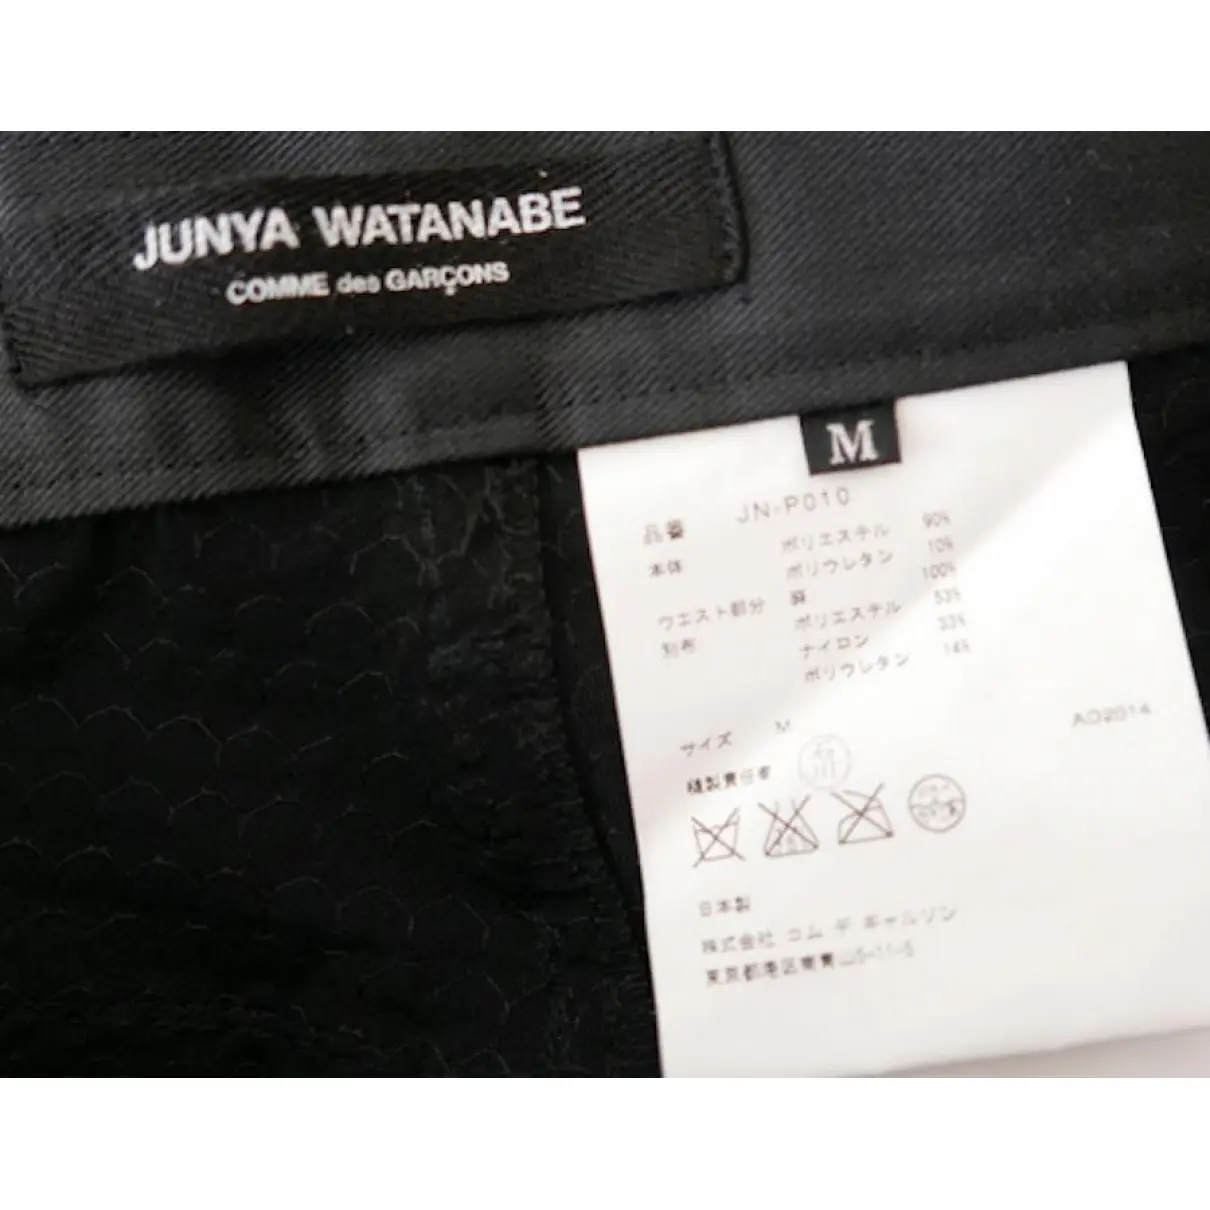 Slim pants Junya Watanabe